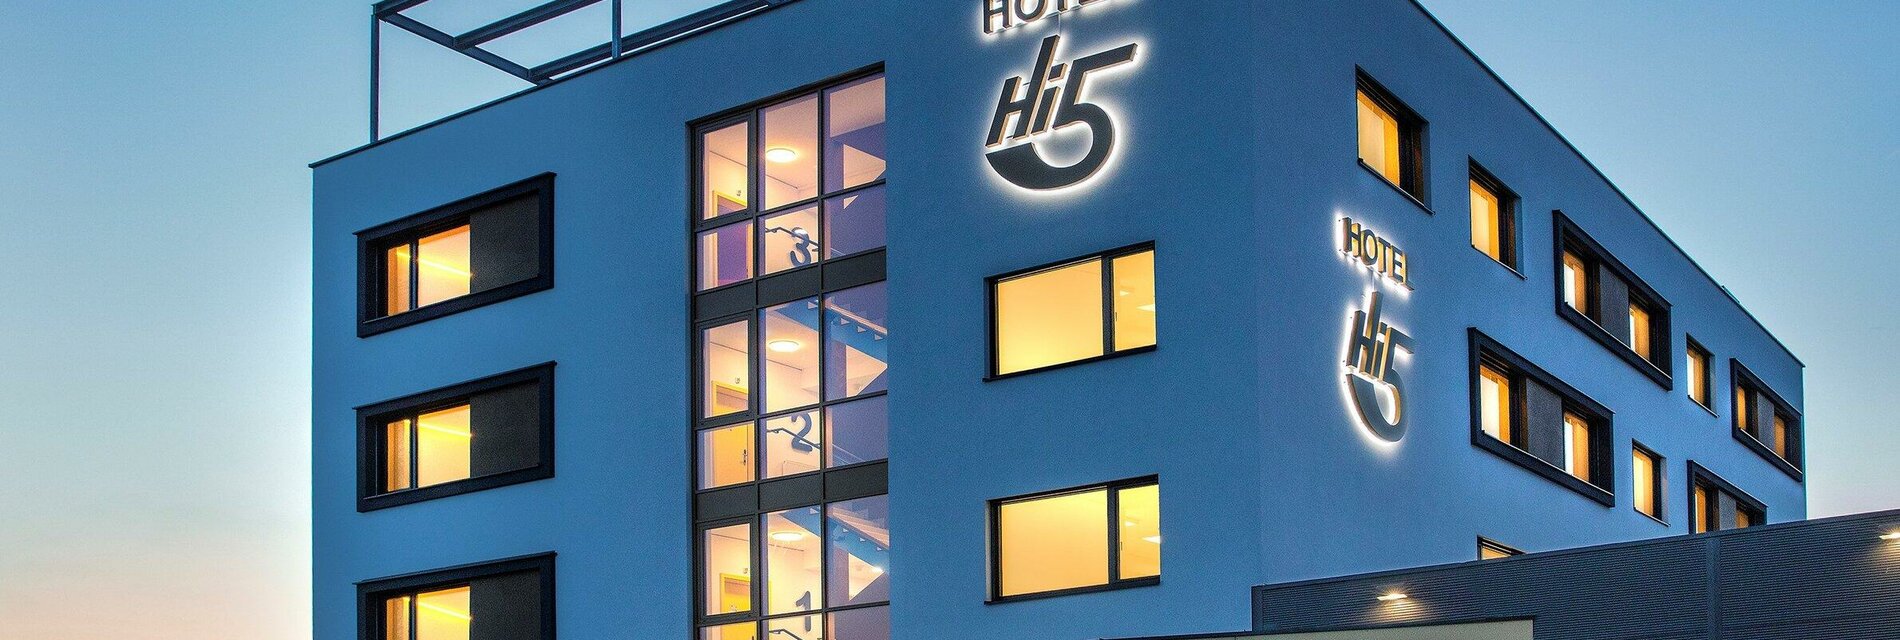 Hi5 Hotel Seiersberg